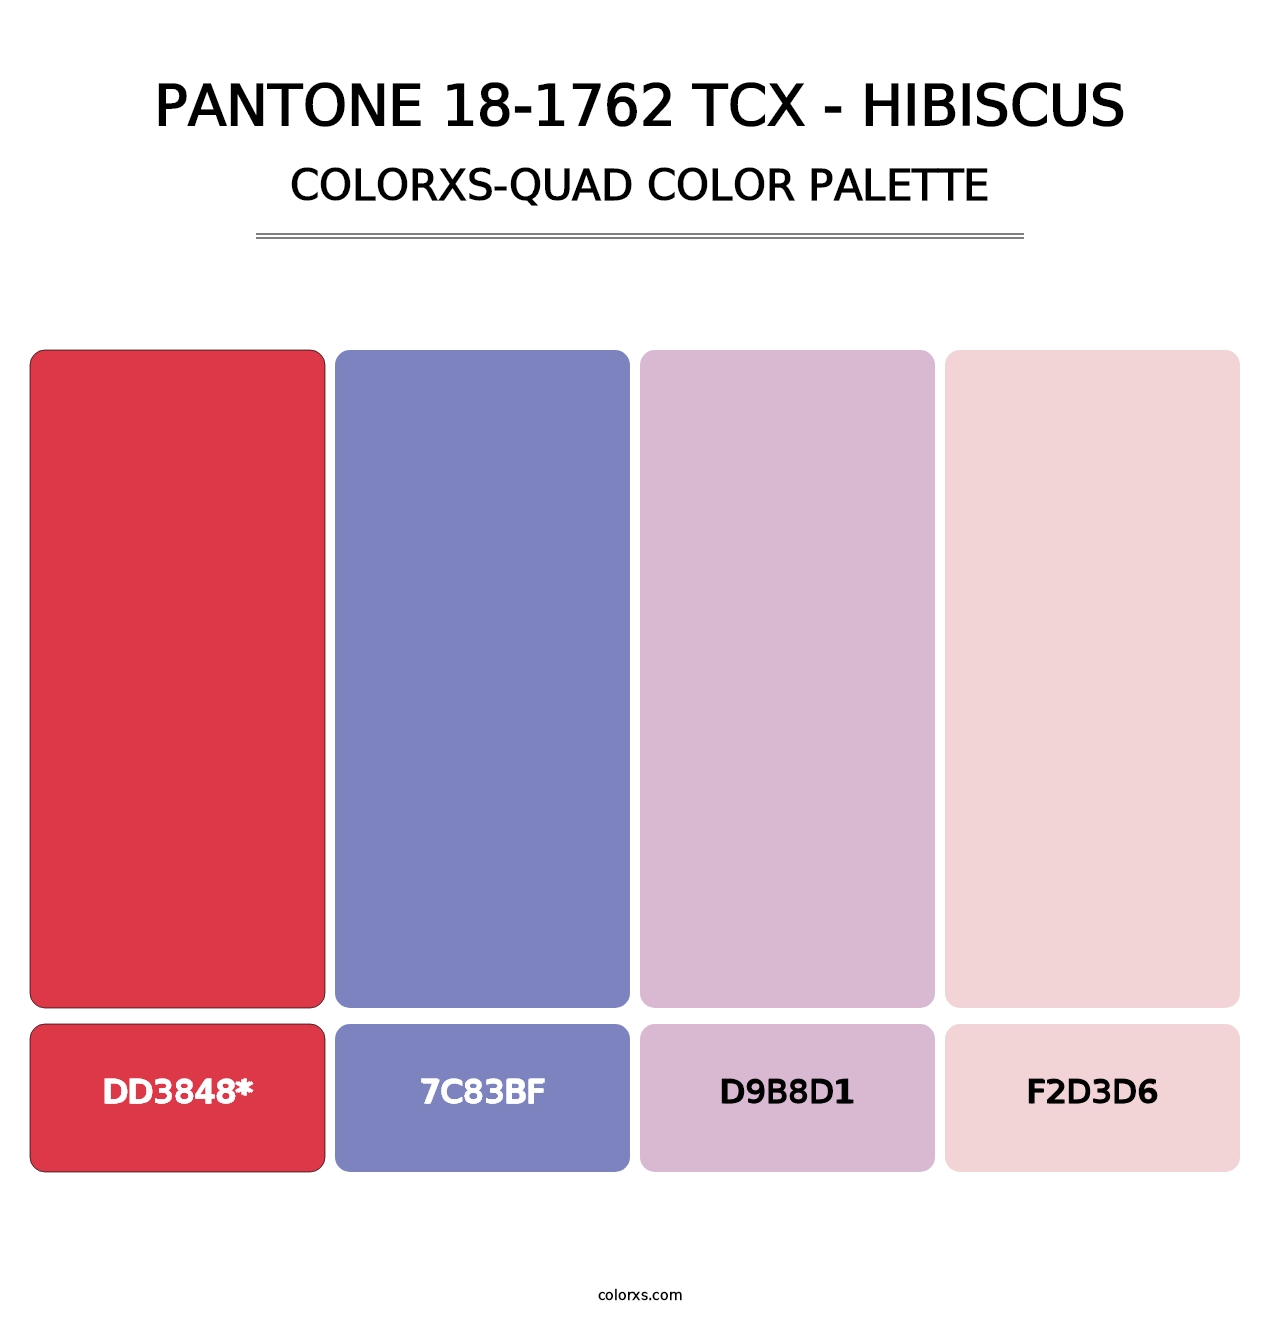 PANTONE 18-1762 TCX - Hibiscus - Colorxs Quad Palette